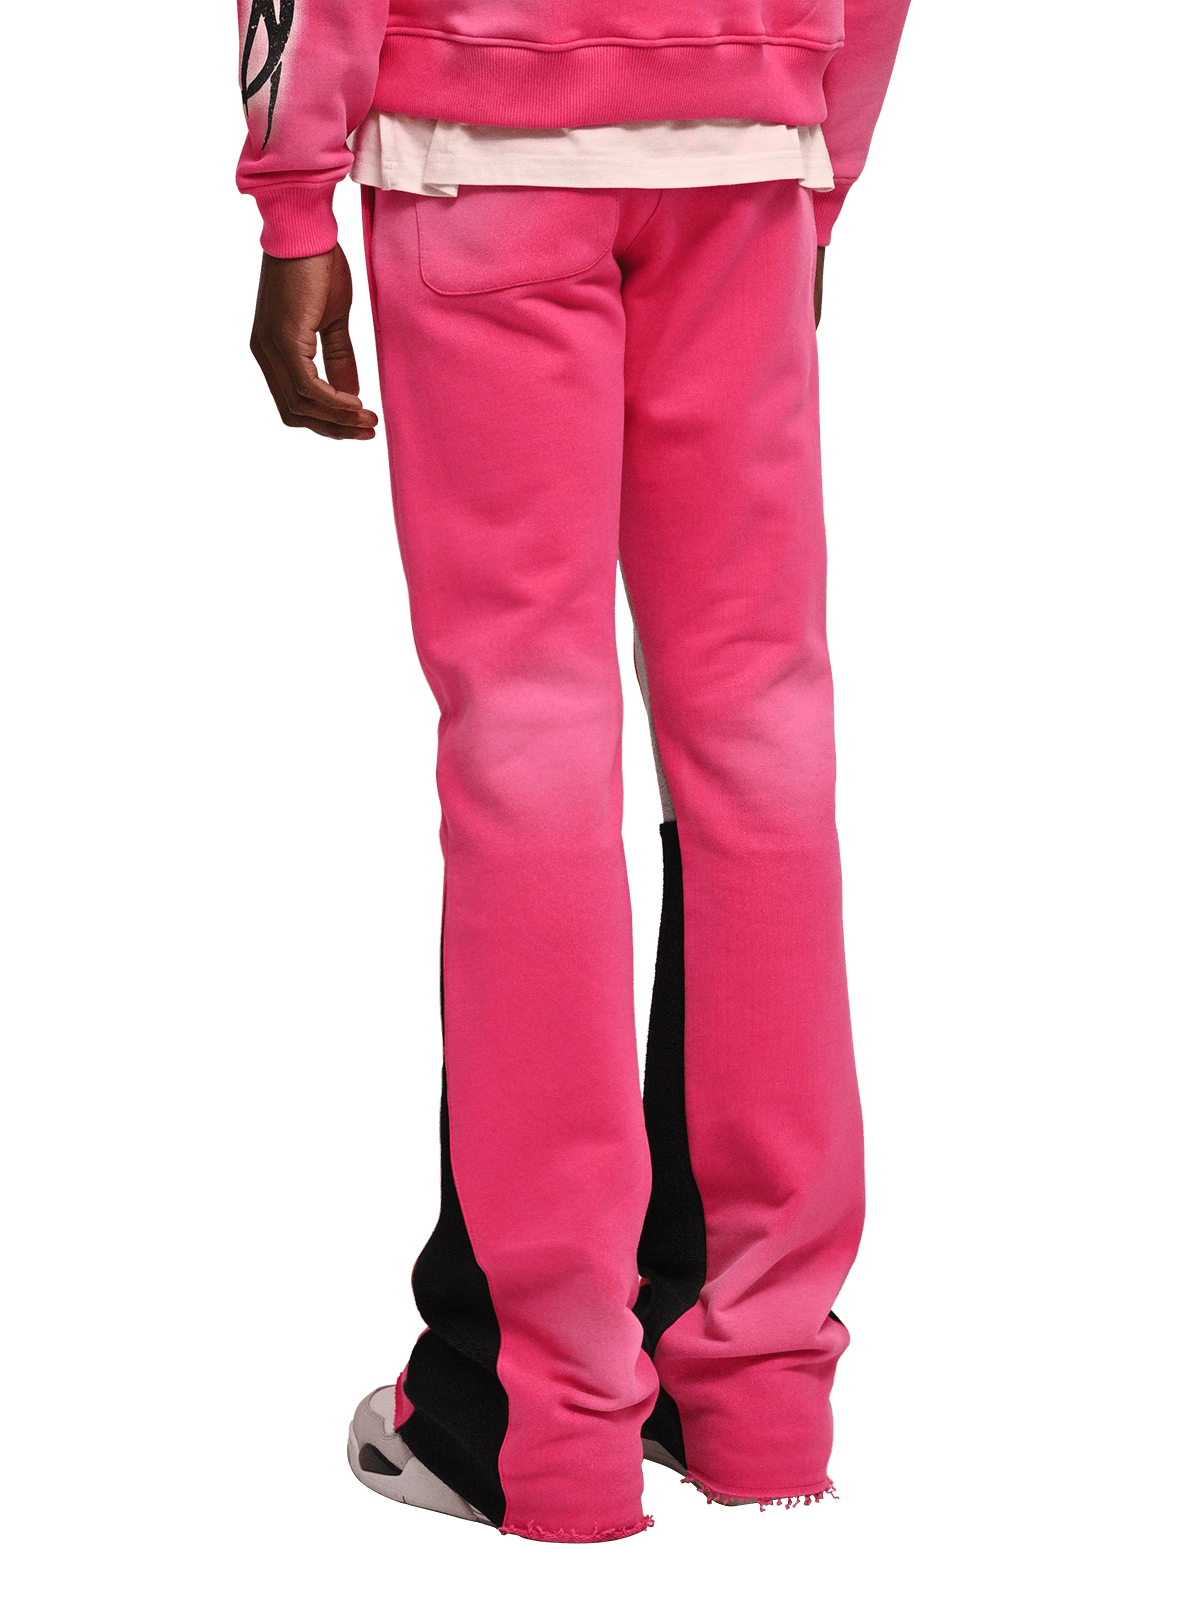 Tribal Flare Sweatpants - Hot Pink